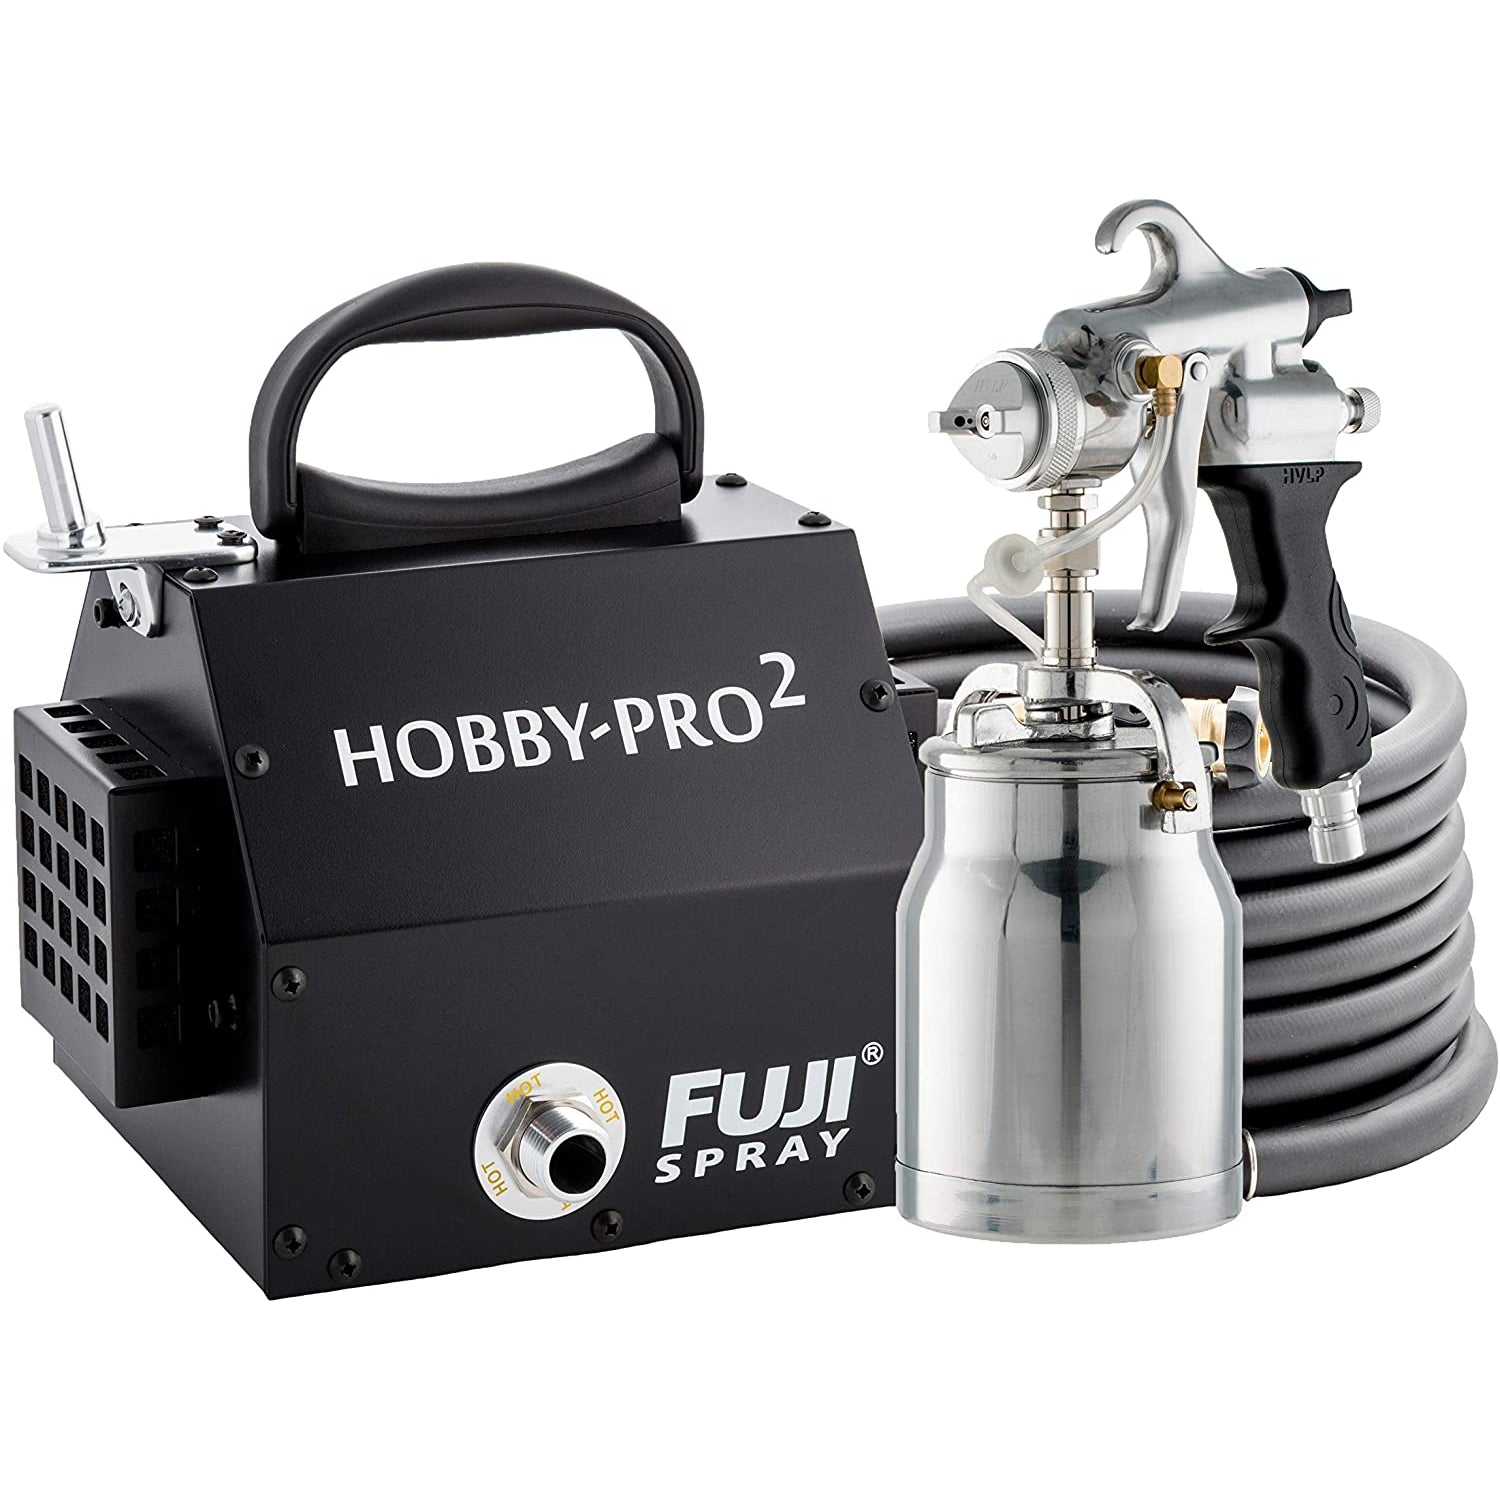 Fuji 2250 Hobby-PRO 2 HVLP Spray System + Bonus Kit + Bonus Filters - The Paint People